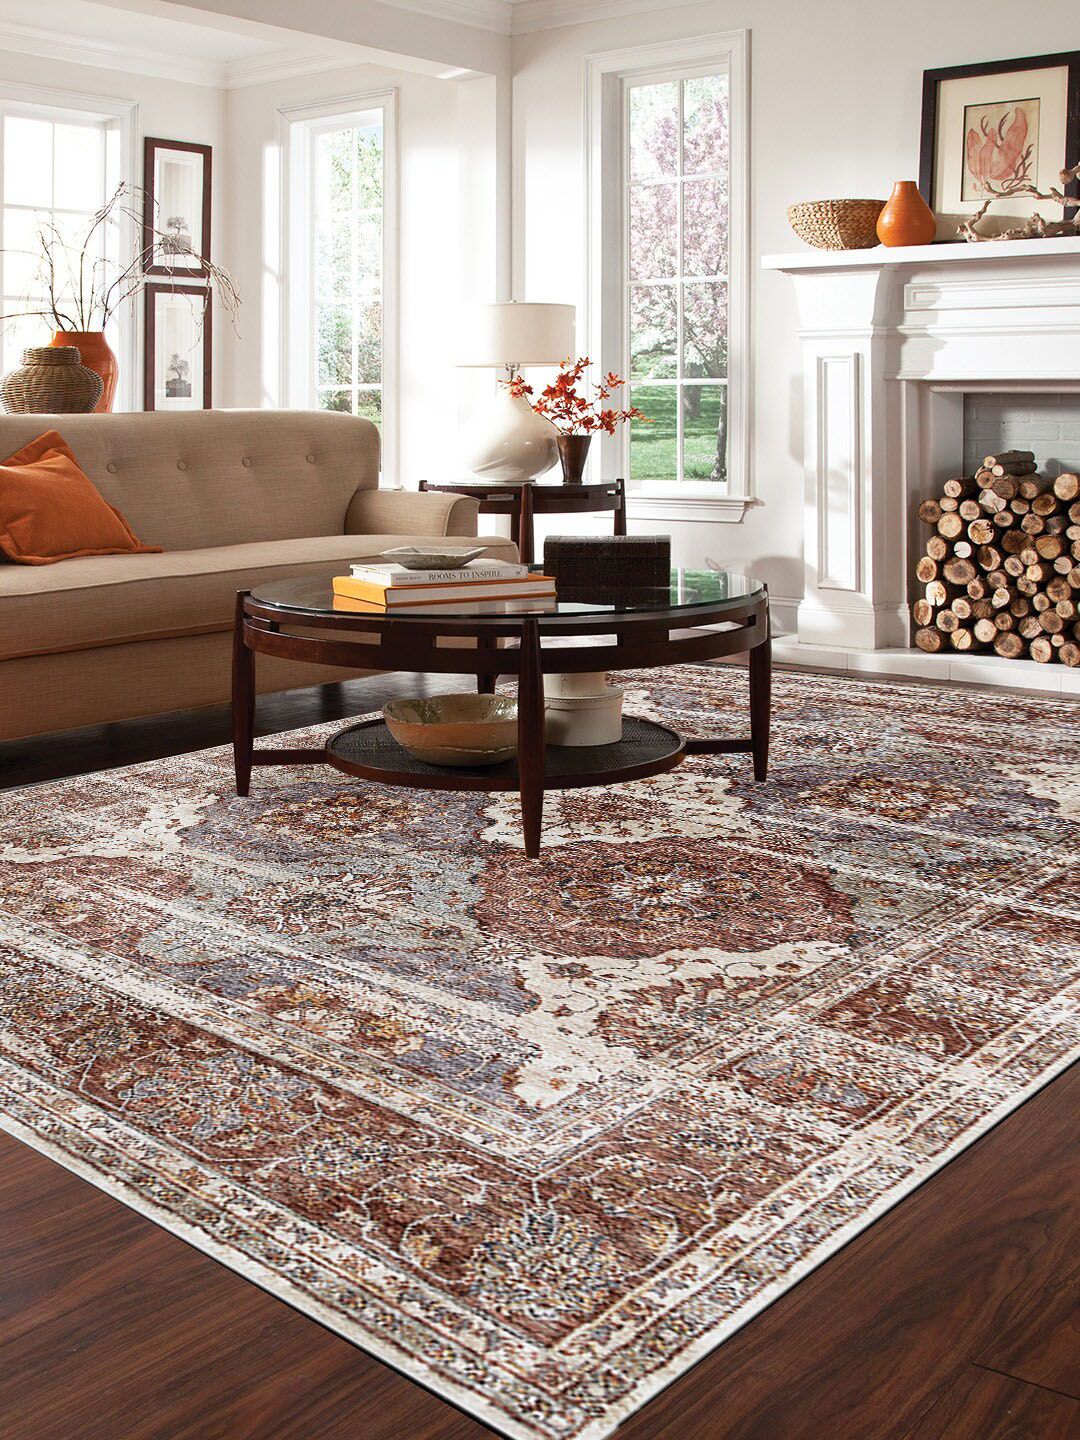 Ddecor Brown Ethnic Motifs Carpet Price in India